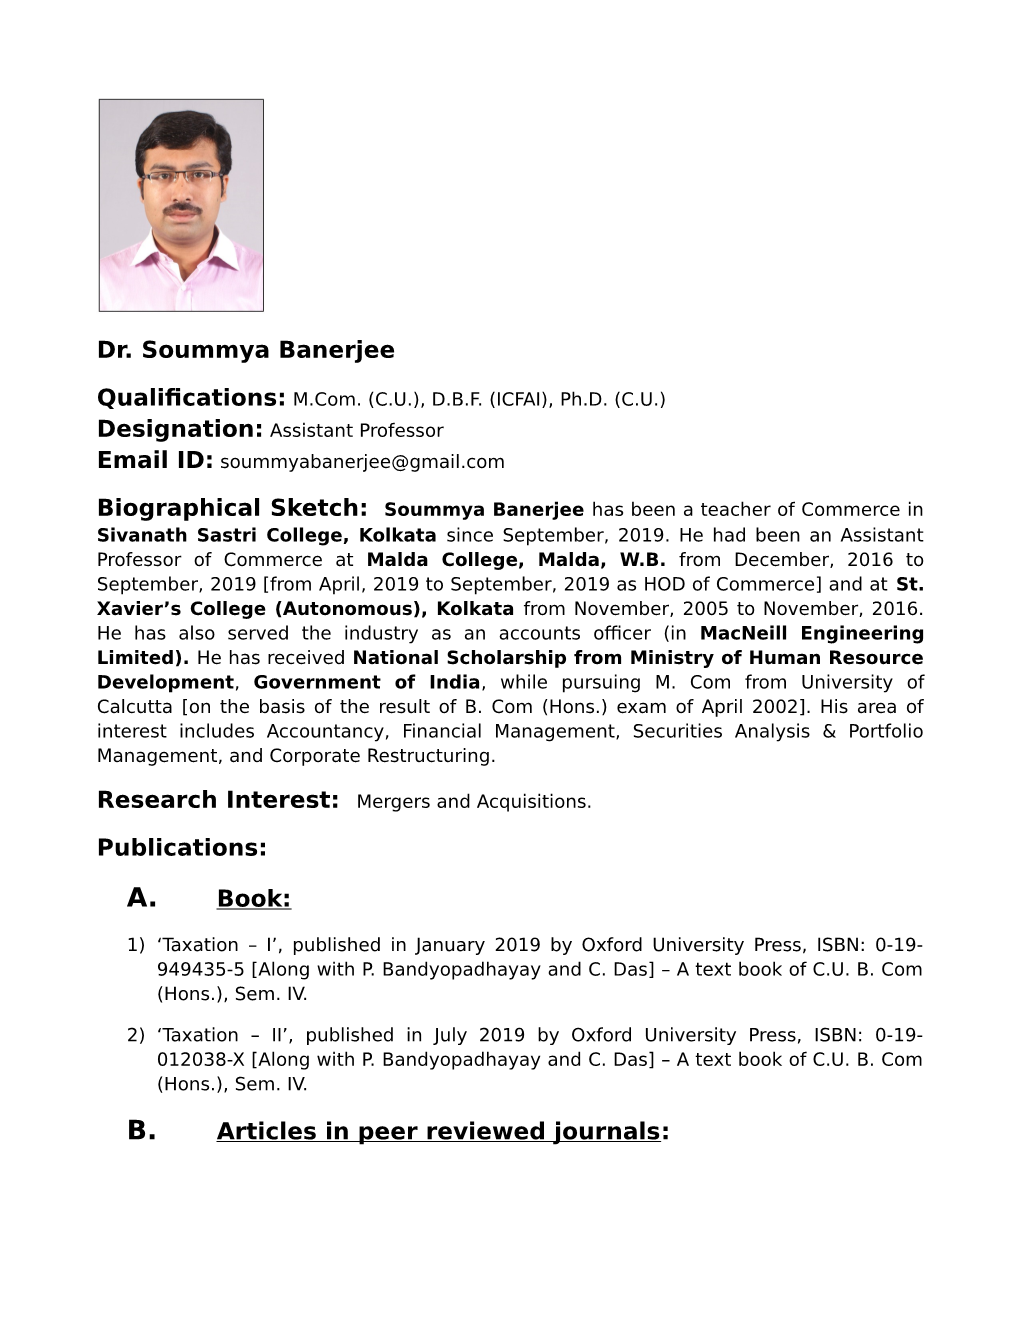 Dr. Soummya Banerjee Publications: Book: Articles in Peer Reviewed